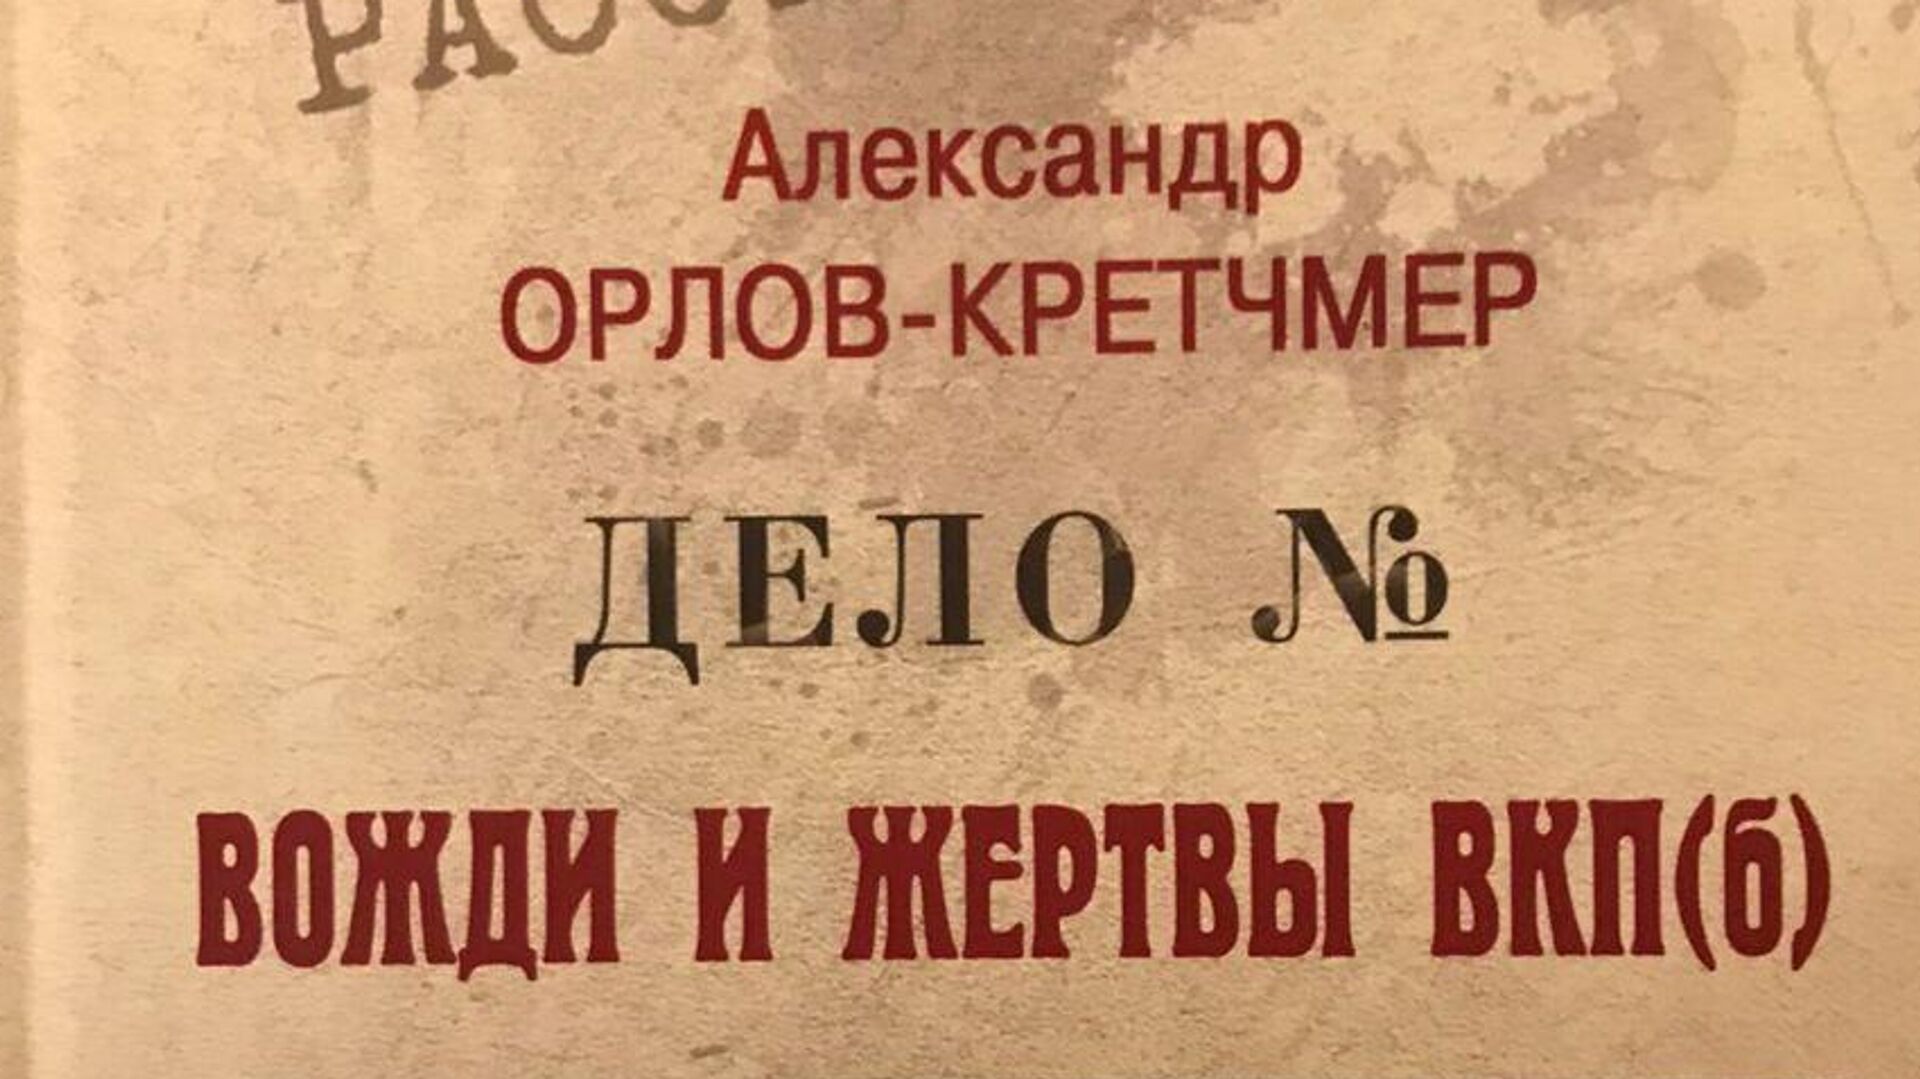 Dышла новая книга Александра Орлова-Кретчмер - Sputnik Аҧсны, 1920, 30.11.2022